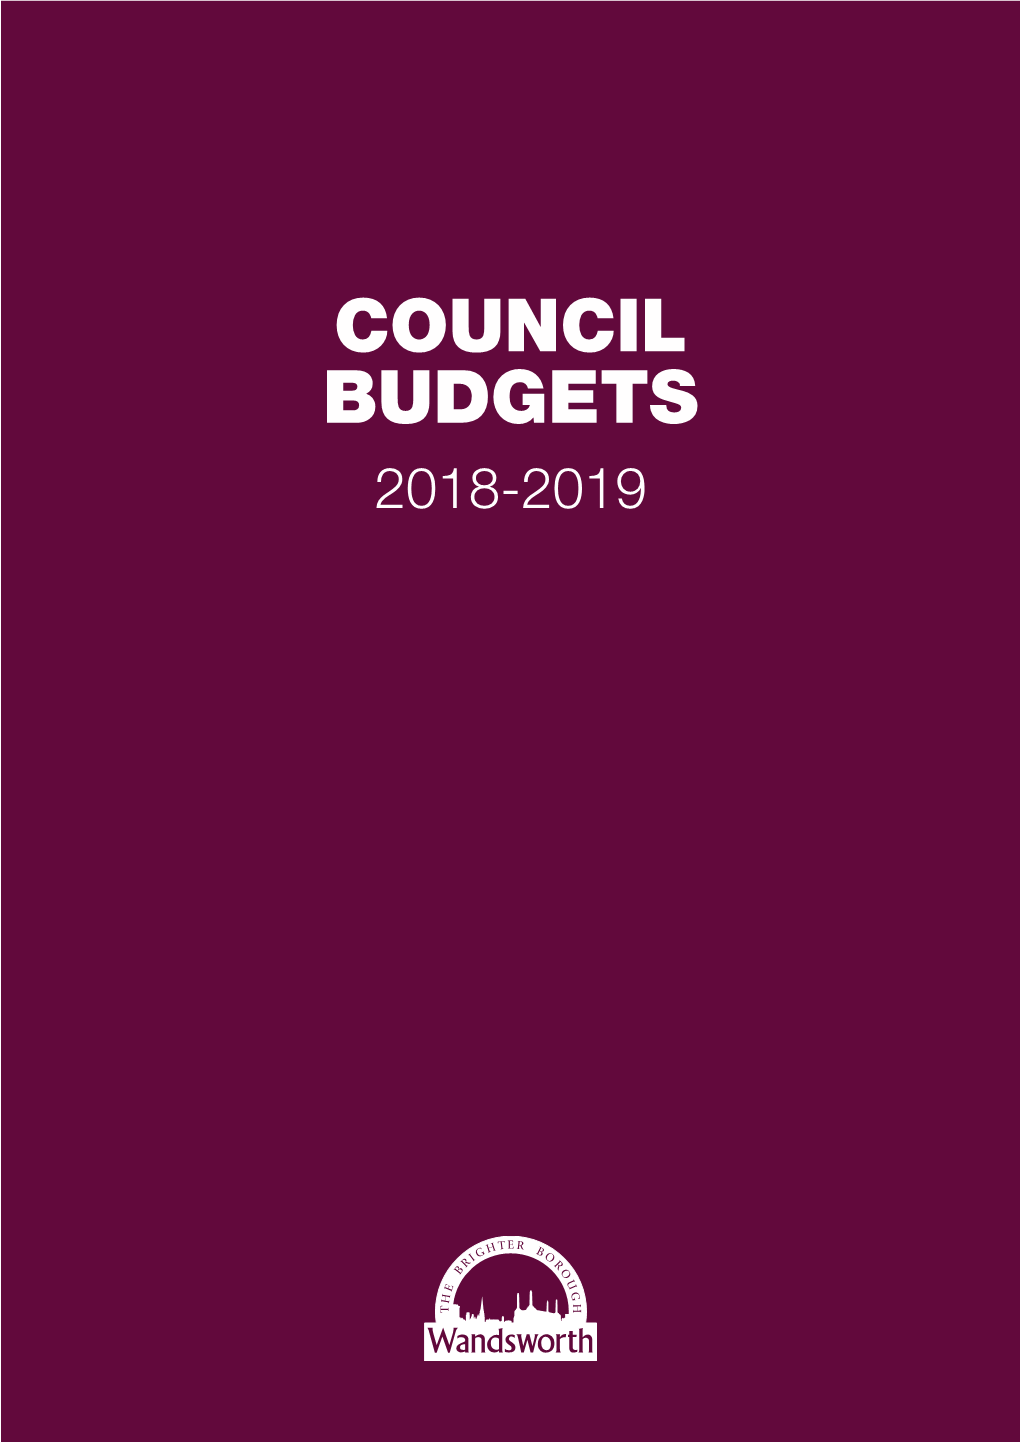 Council Budget 2018/19